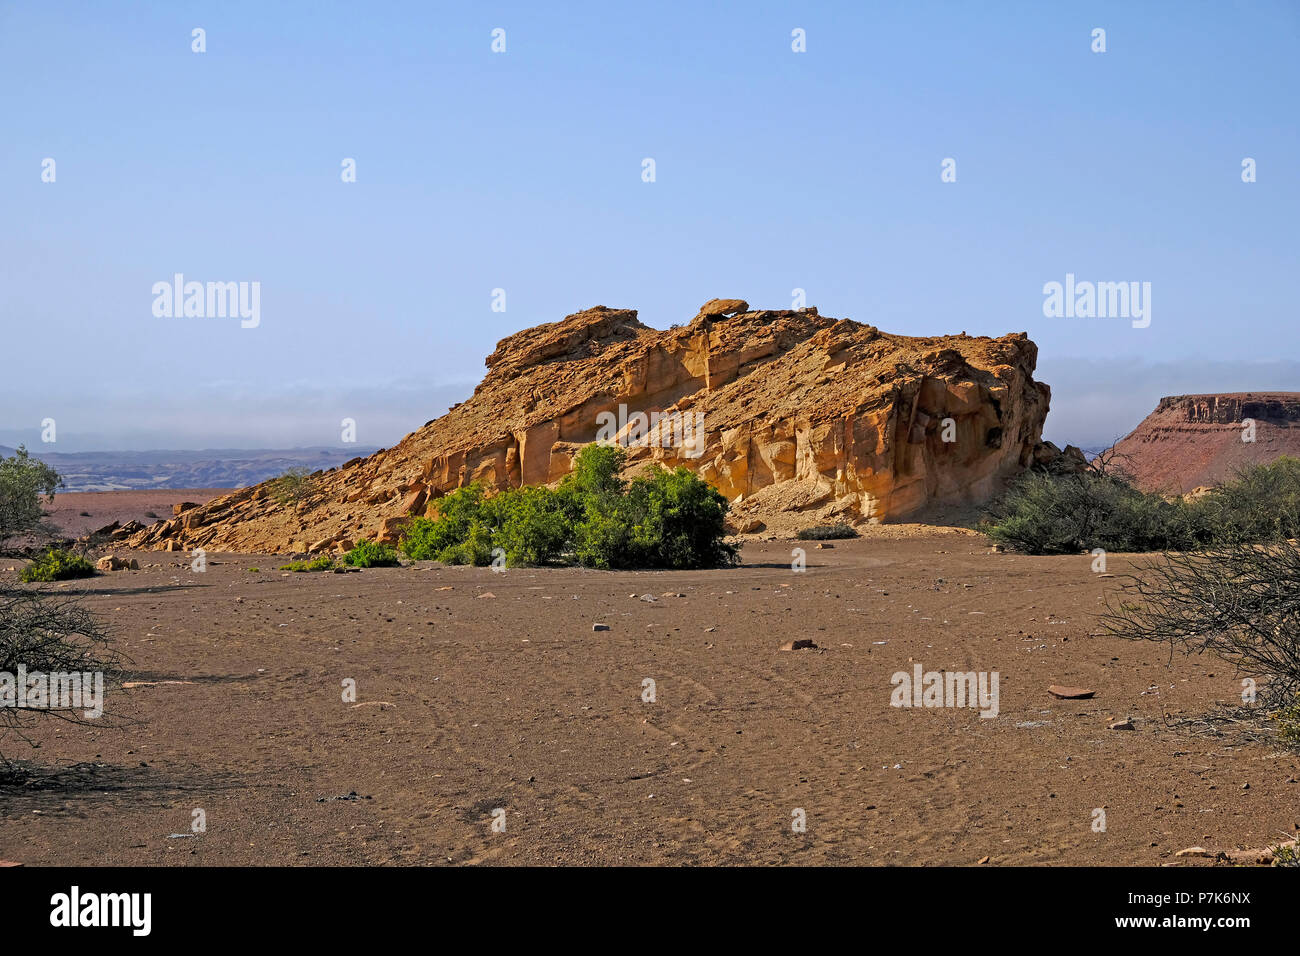 freestanding, highly eroded sandstone cliffs in desert landscape Stock Photo